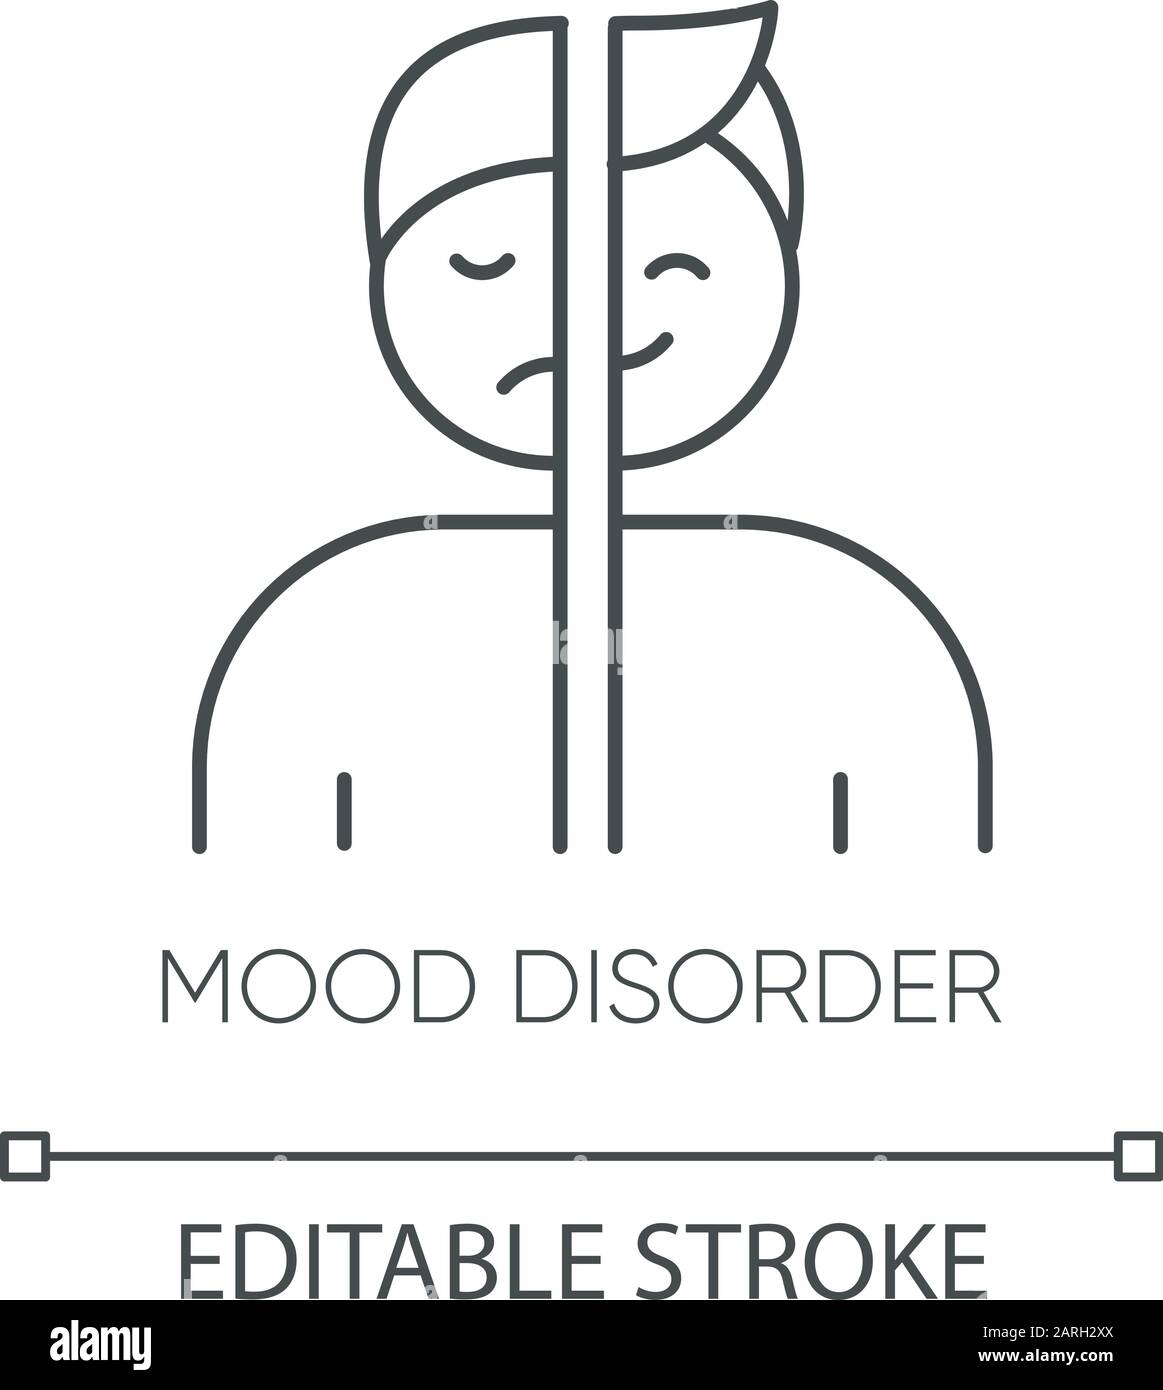 Mood disorder linear icon. Manic, depressive episodes. Dysthymia, cyclothymia. Emotional swing. Mental health. Thin line illustration. Contour symbol. Stock Vector